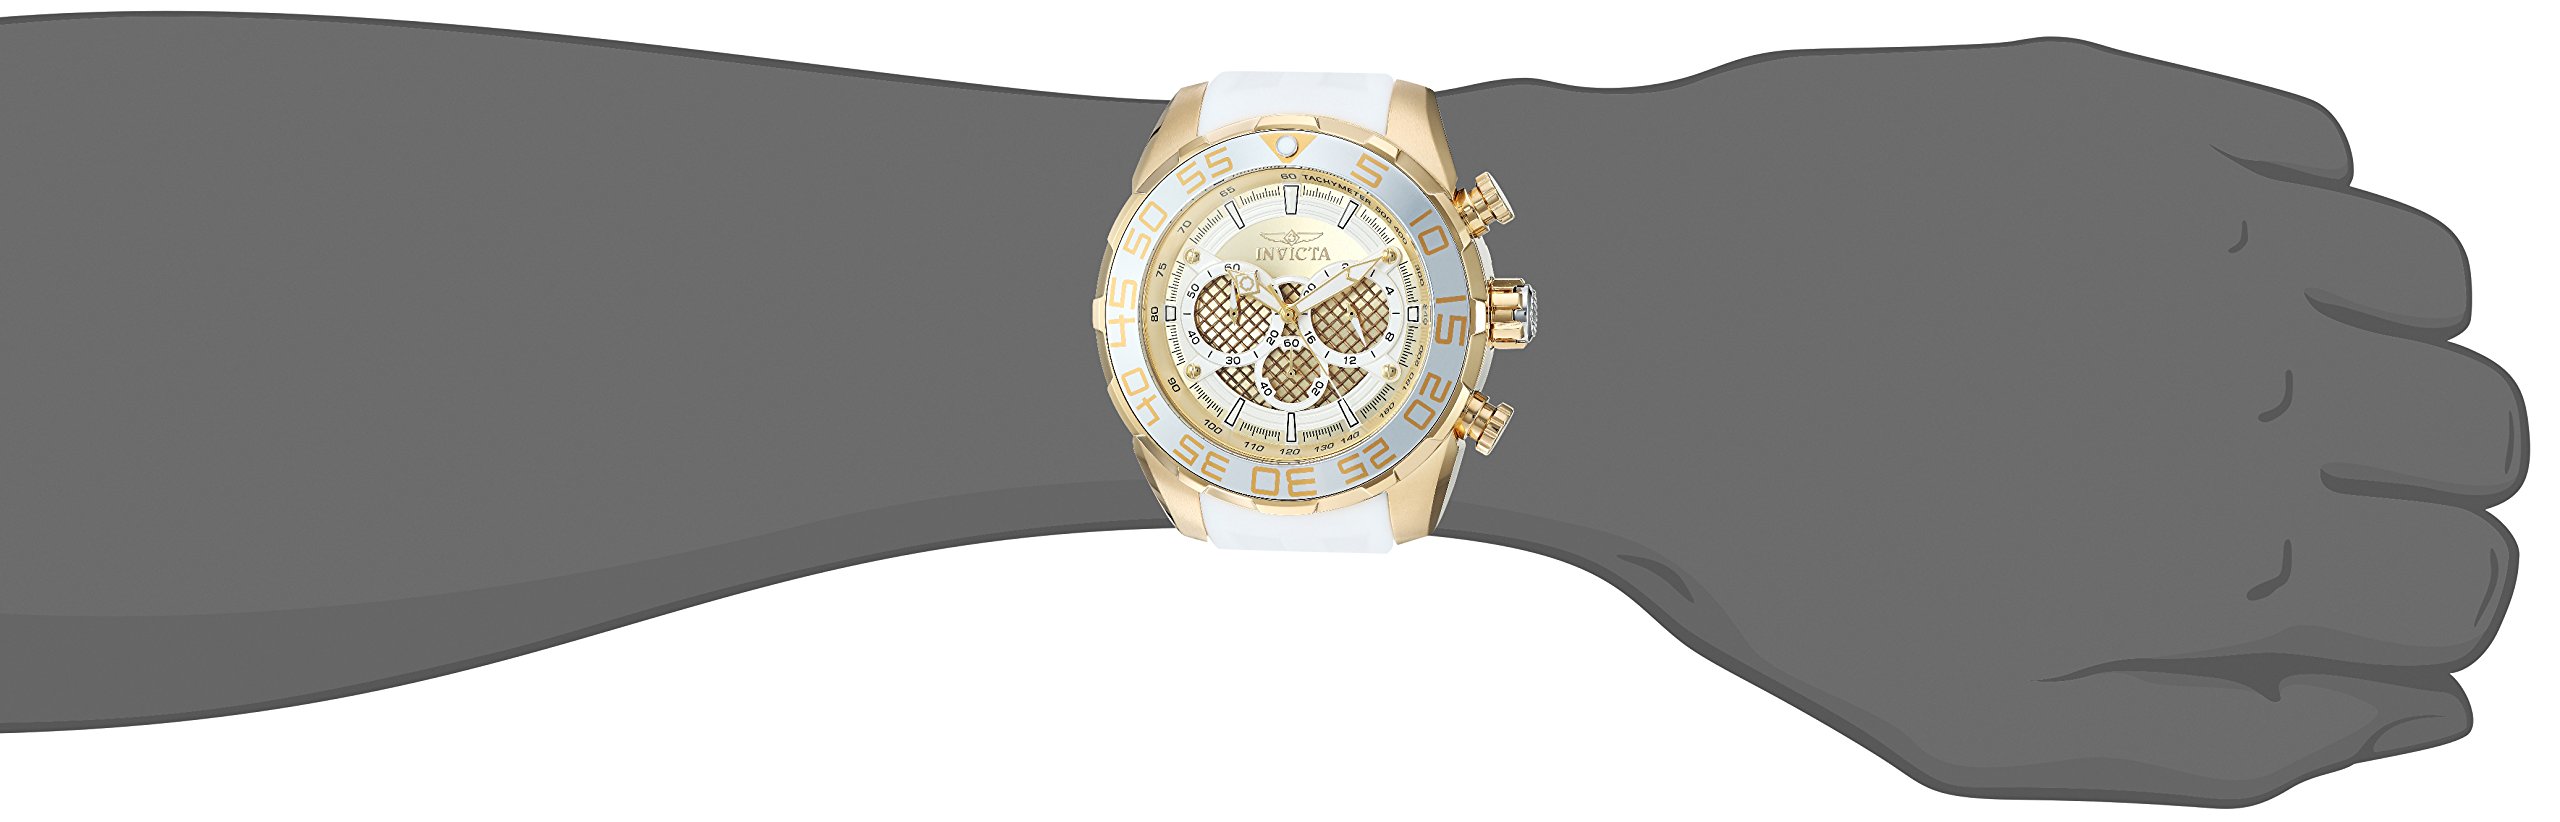 Invicta Men's Speedway Stainless Steel Quartz Watch with Silicone Strap, White, 32 (Model: 26303)